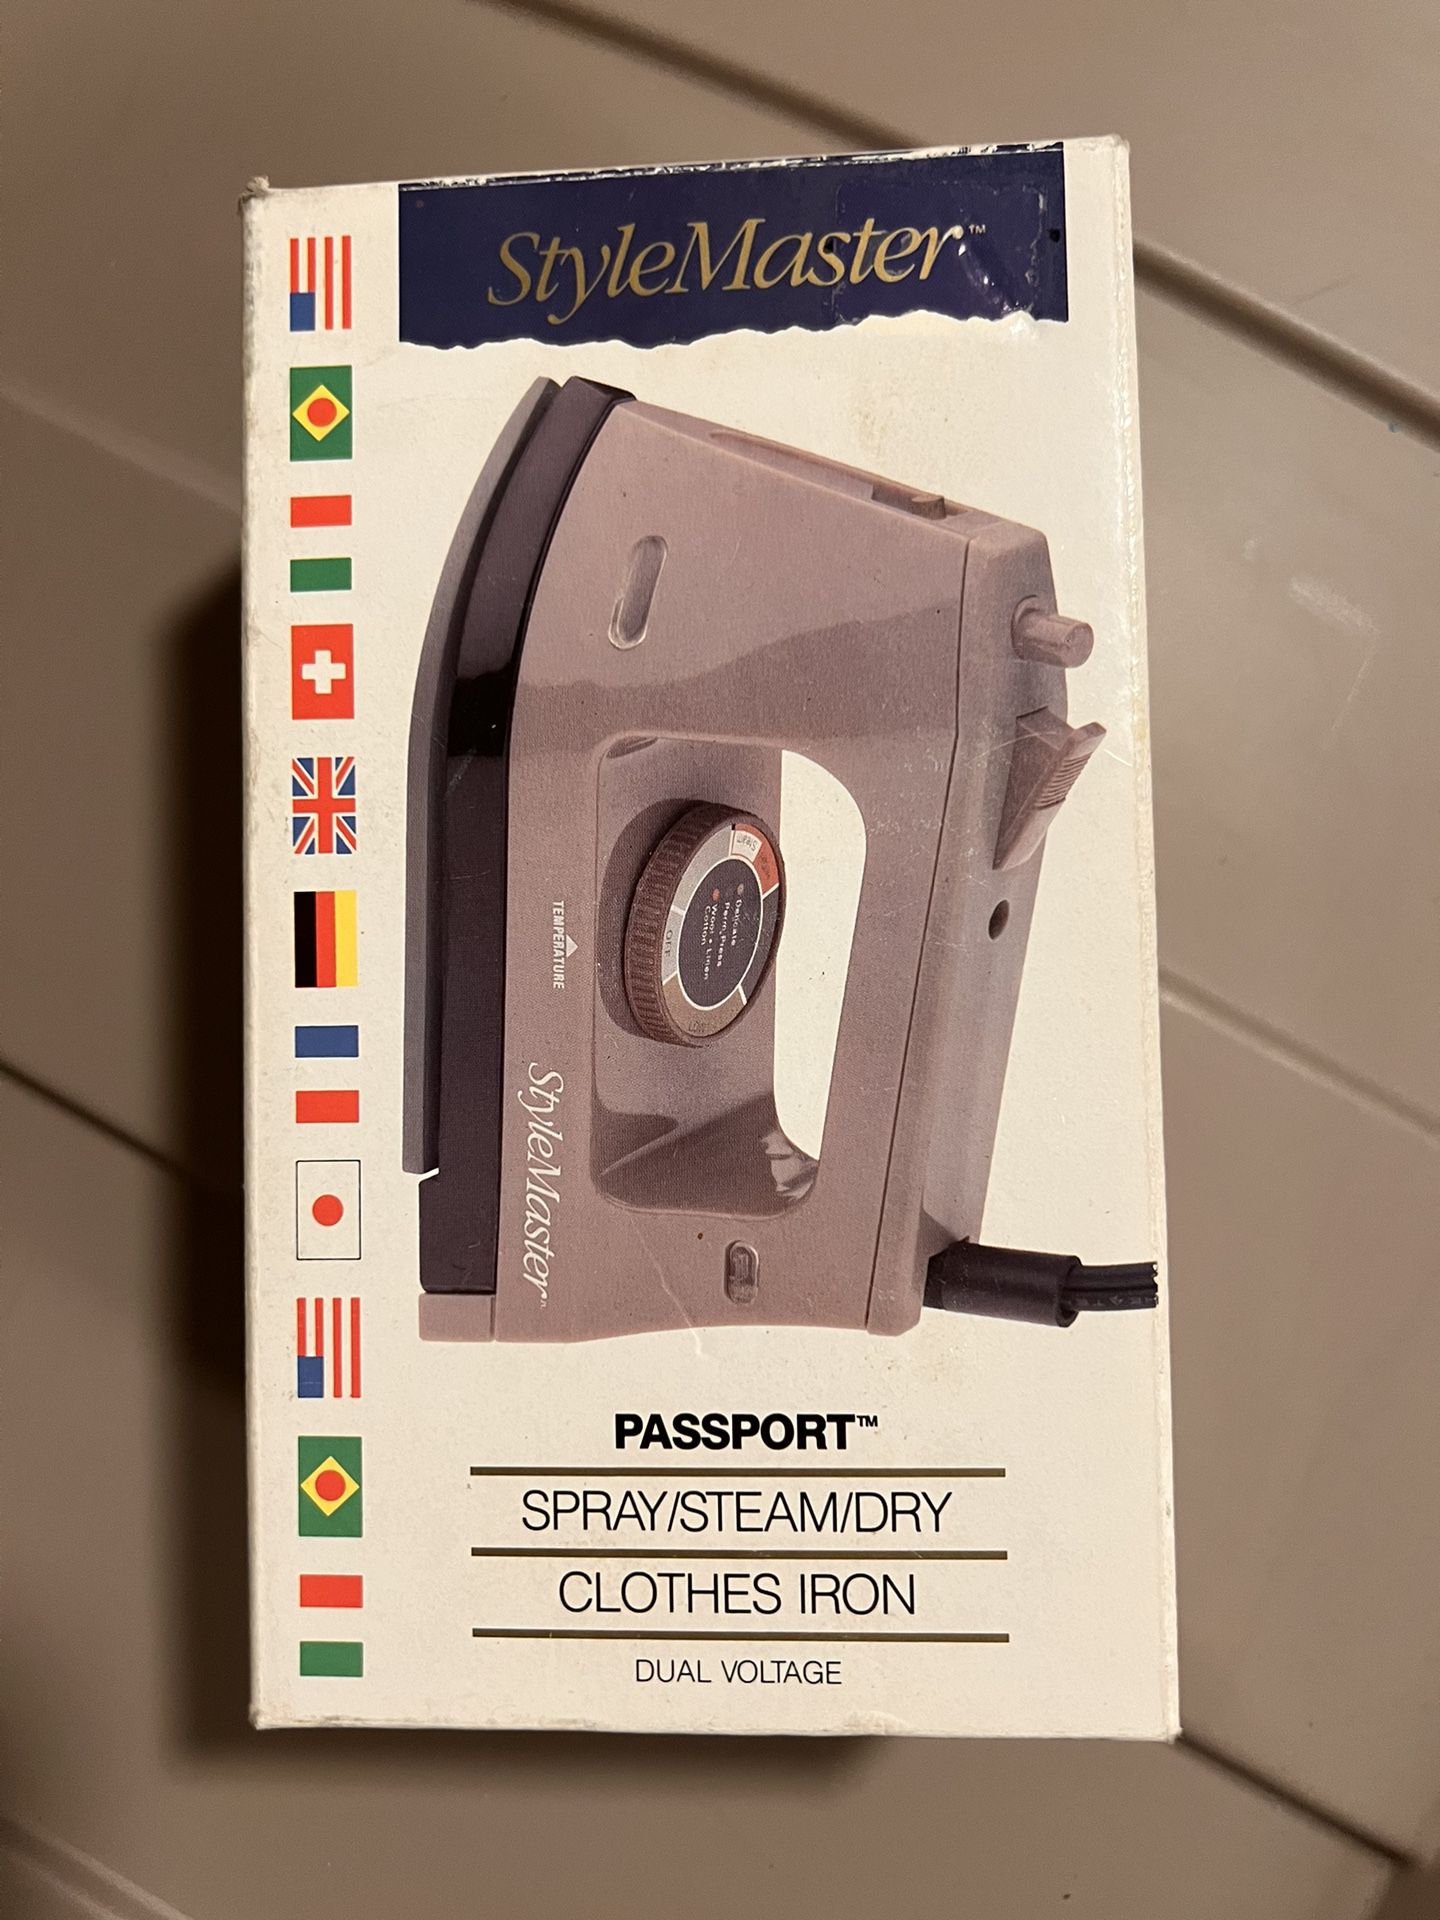 StyleMaster Passport Travel Spray/steam/dry Clothes Iron